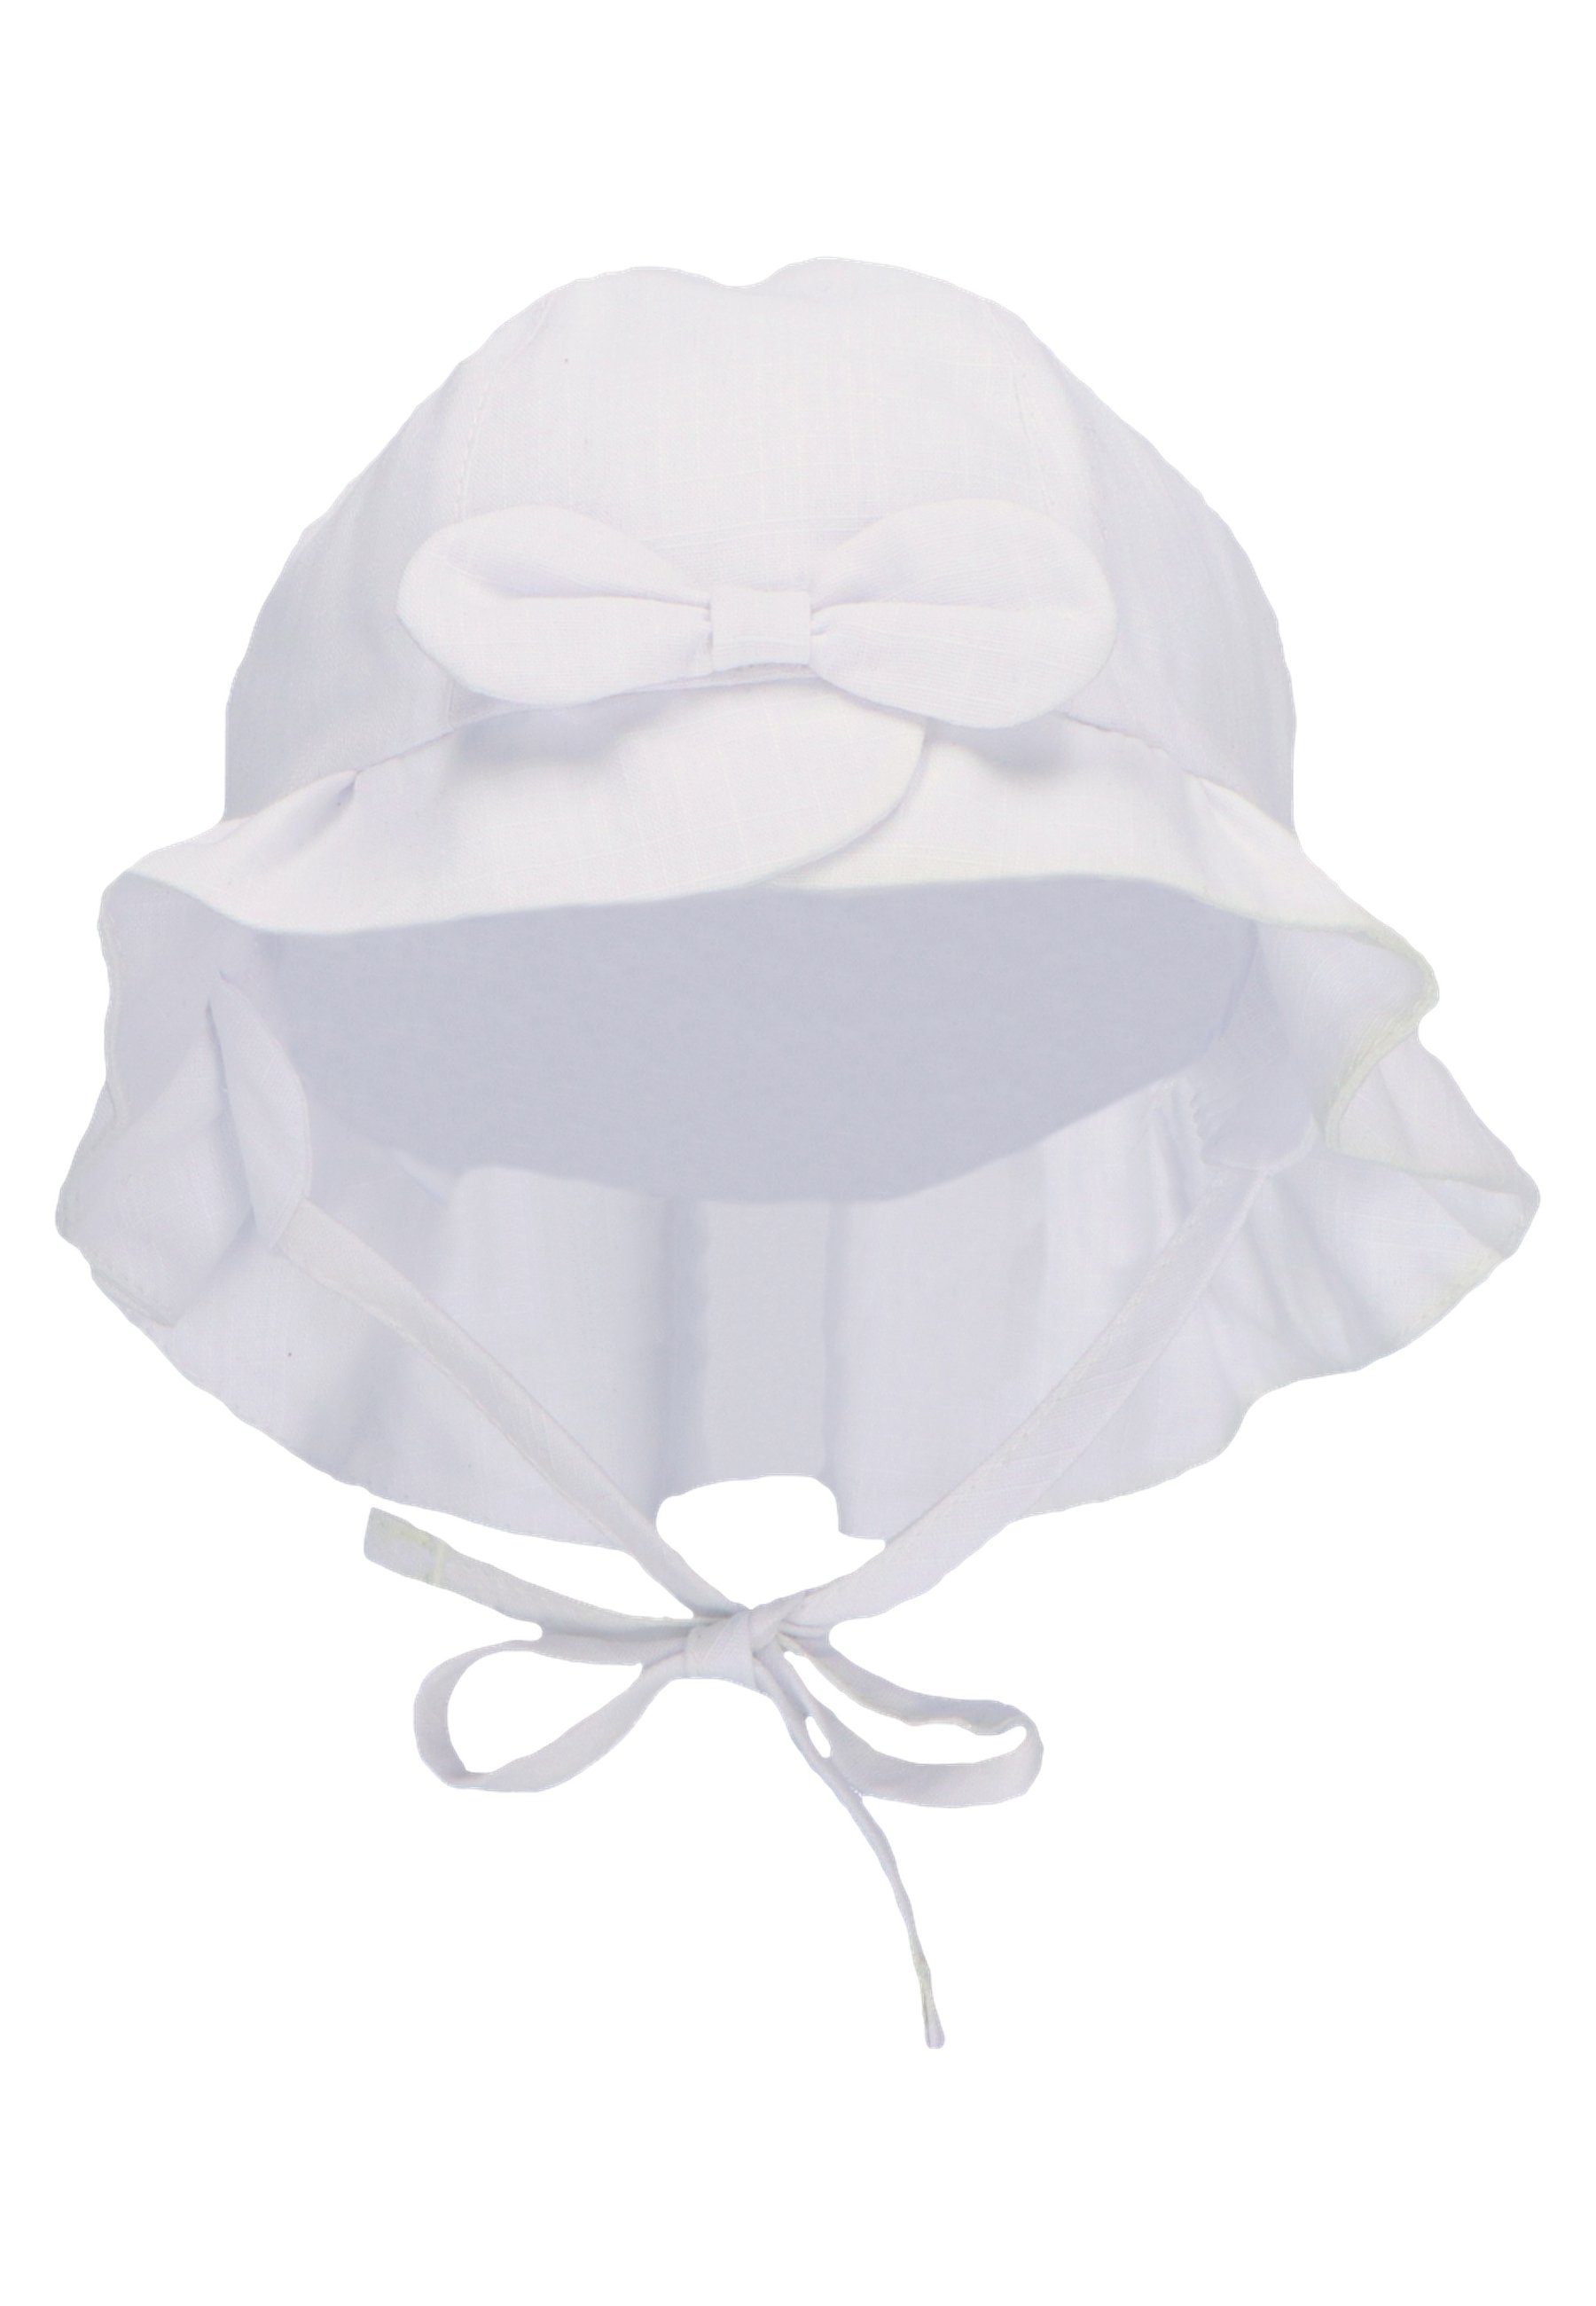 (1-St) Ballonmütze Hut Sterntaler® Leinencharakter weiß